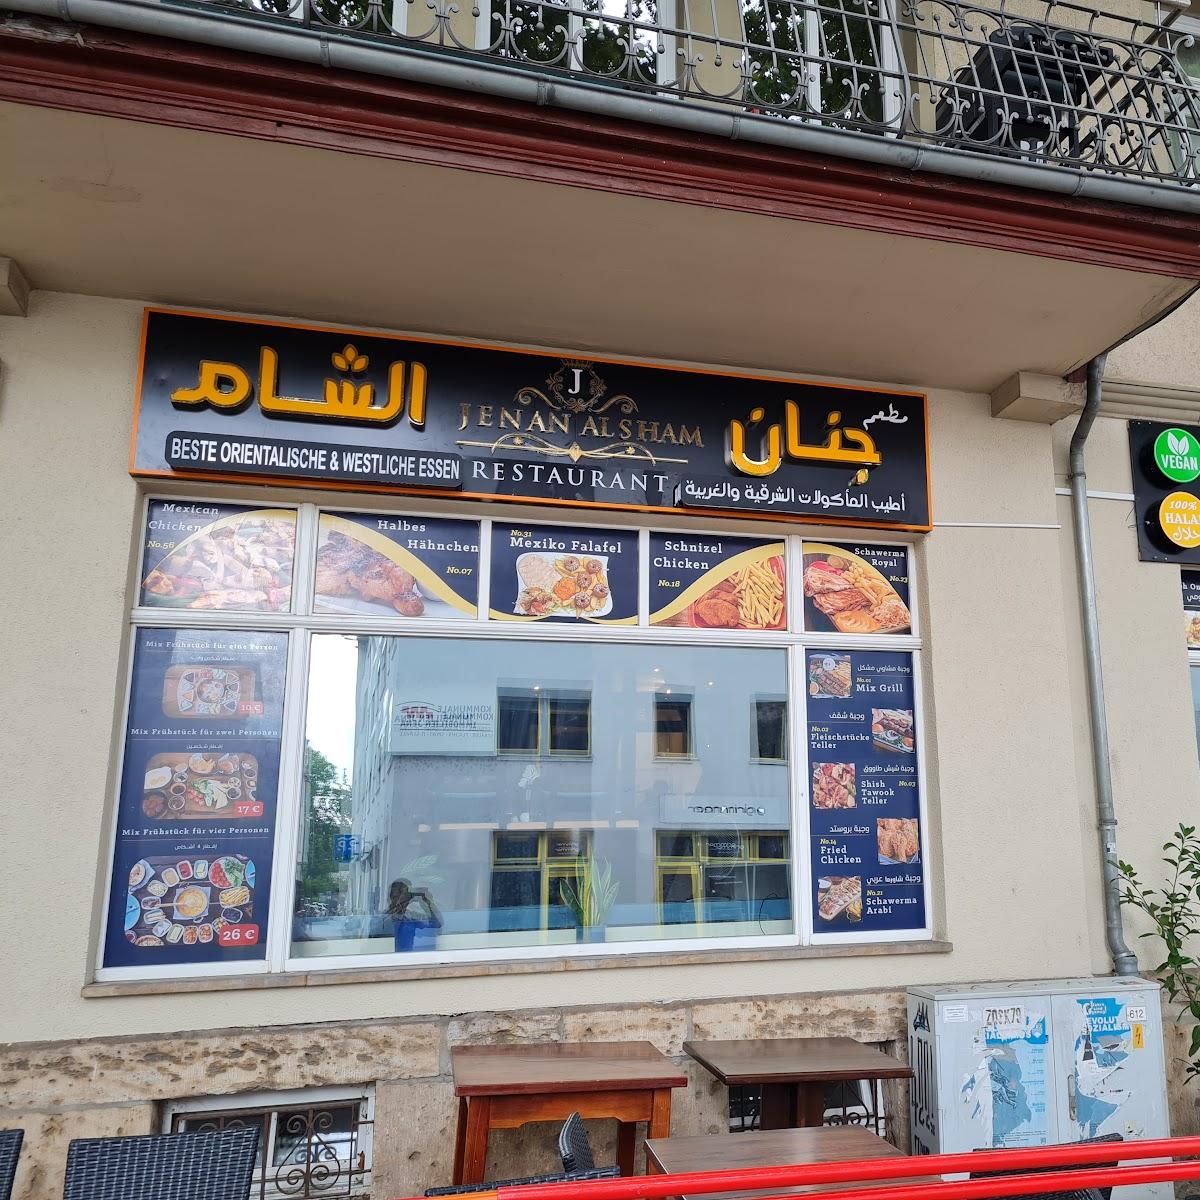 Restaurant "n Al Sham Restaurant" in Jena